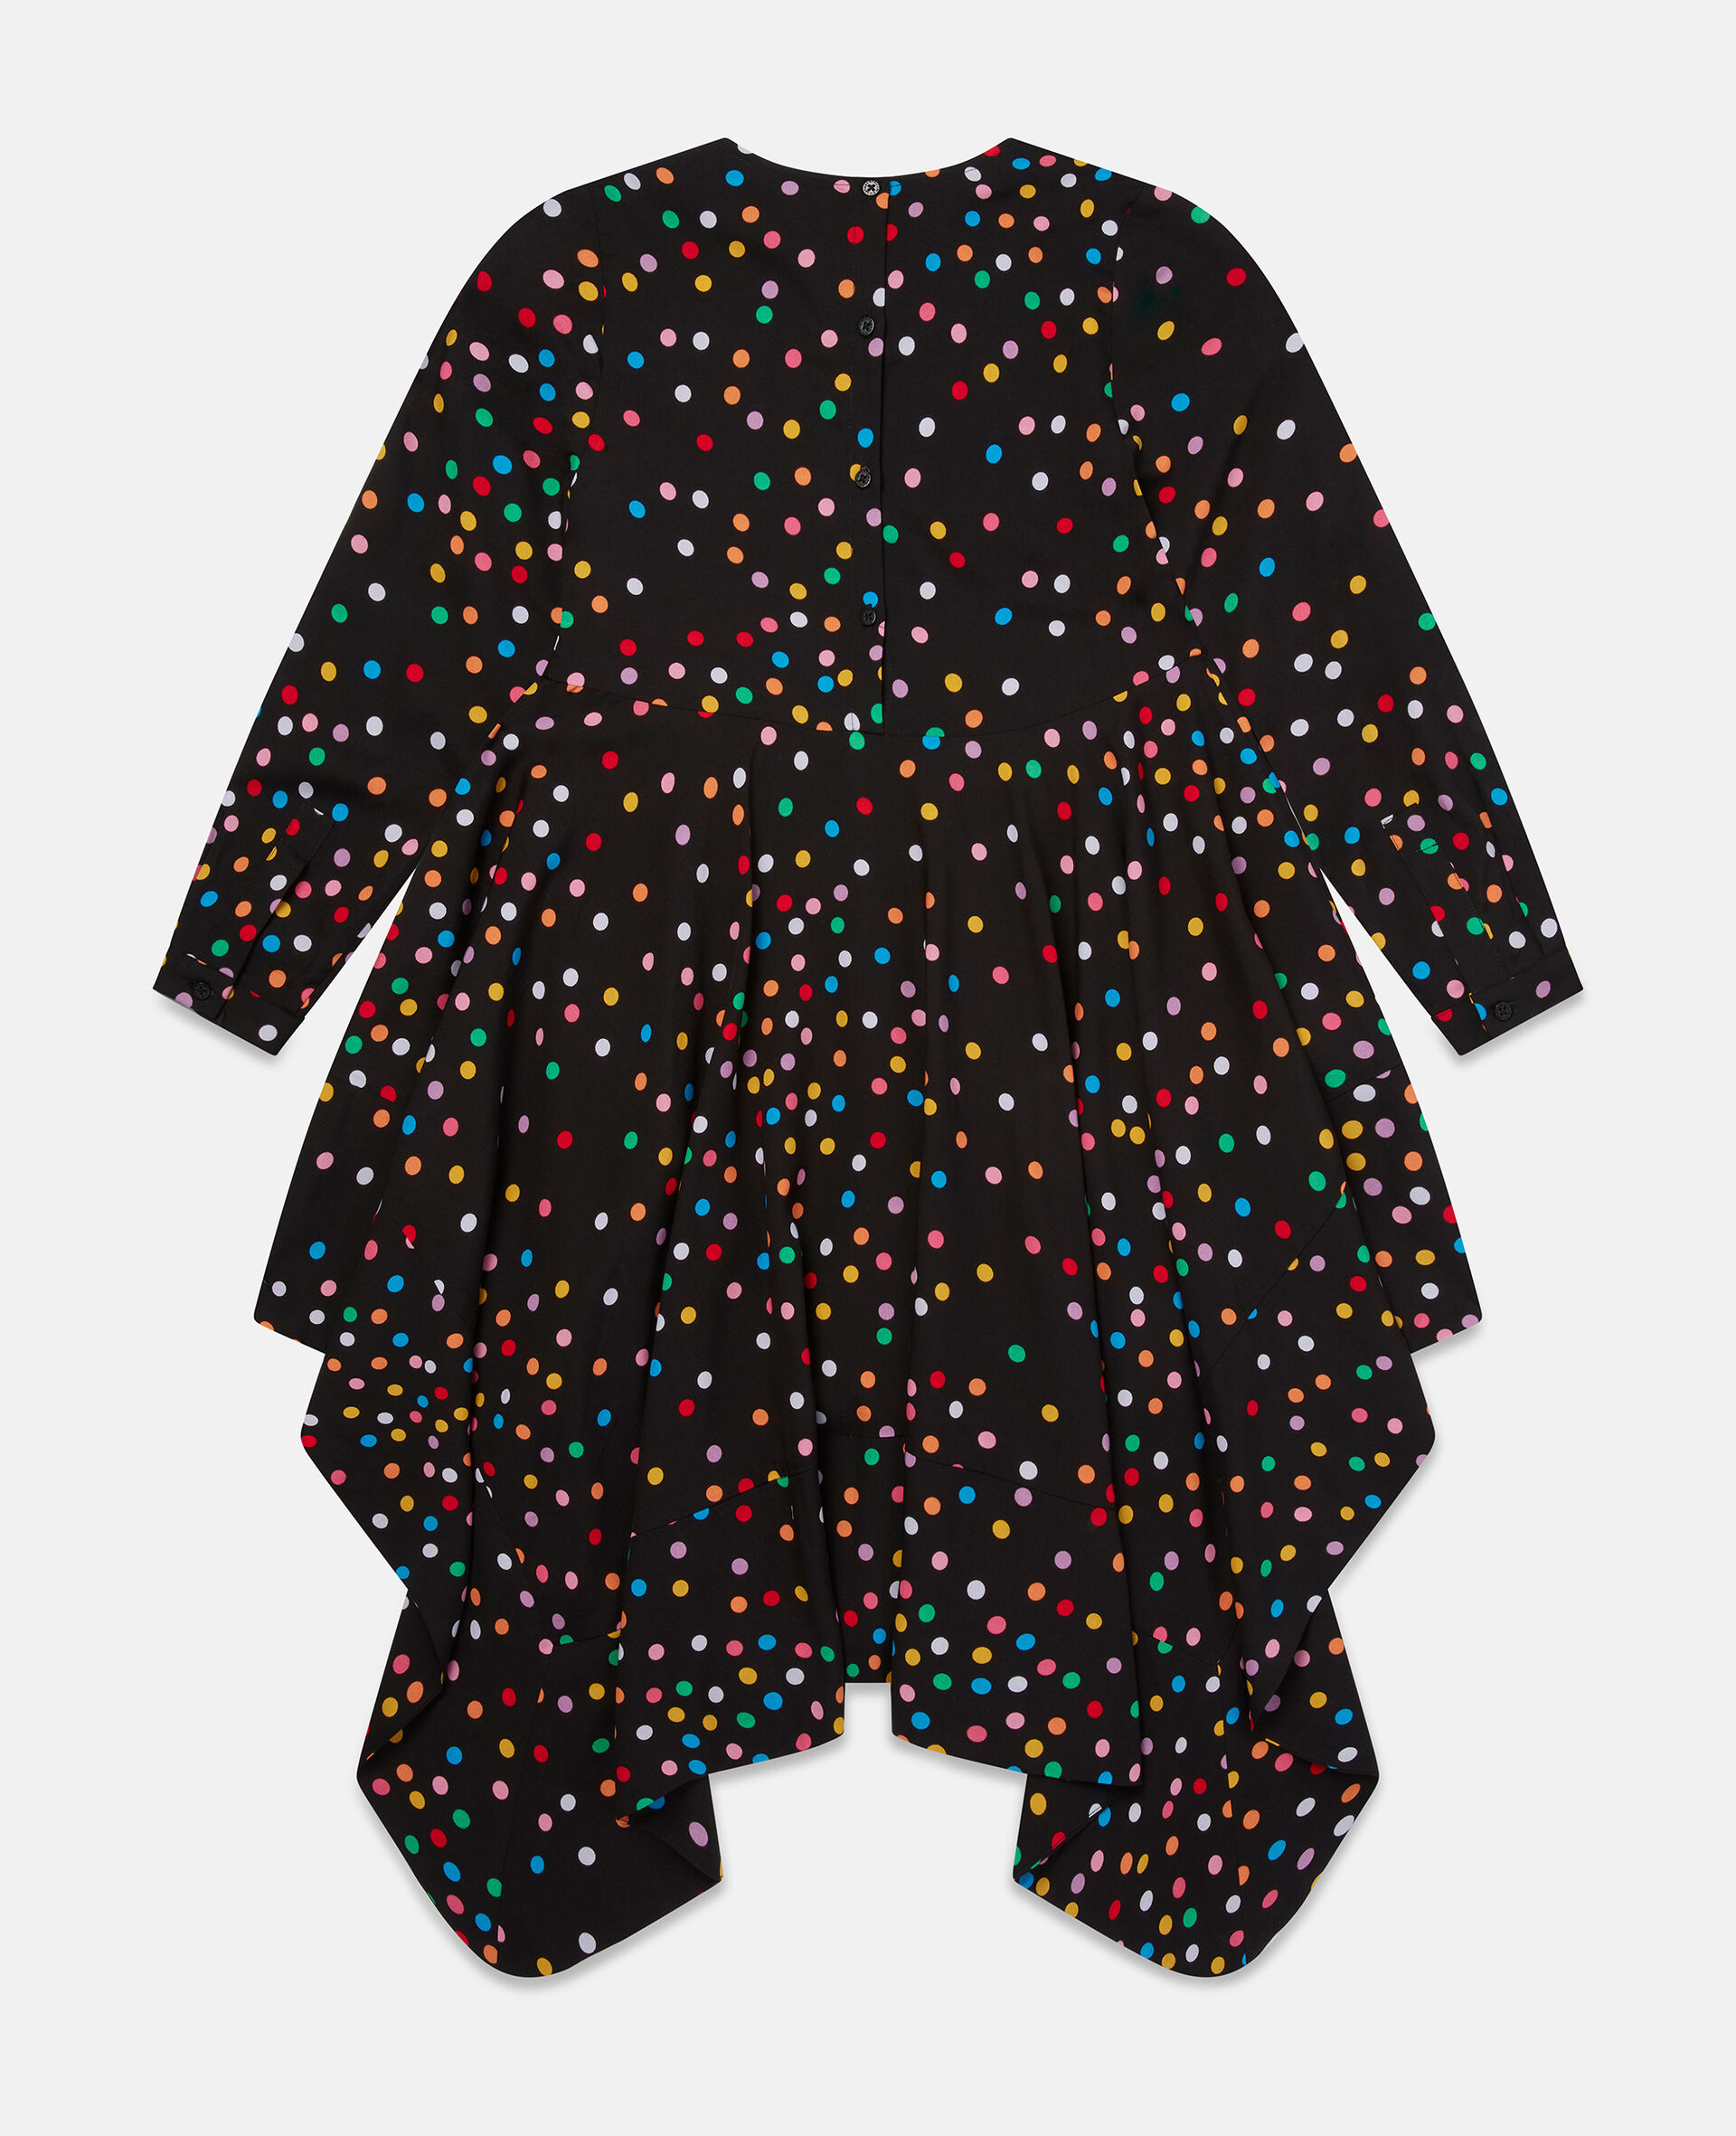 Rainbow Confetti Print Dress-Black-large image number 2